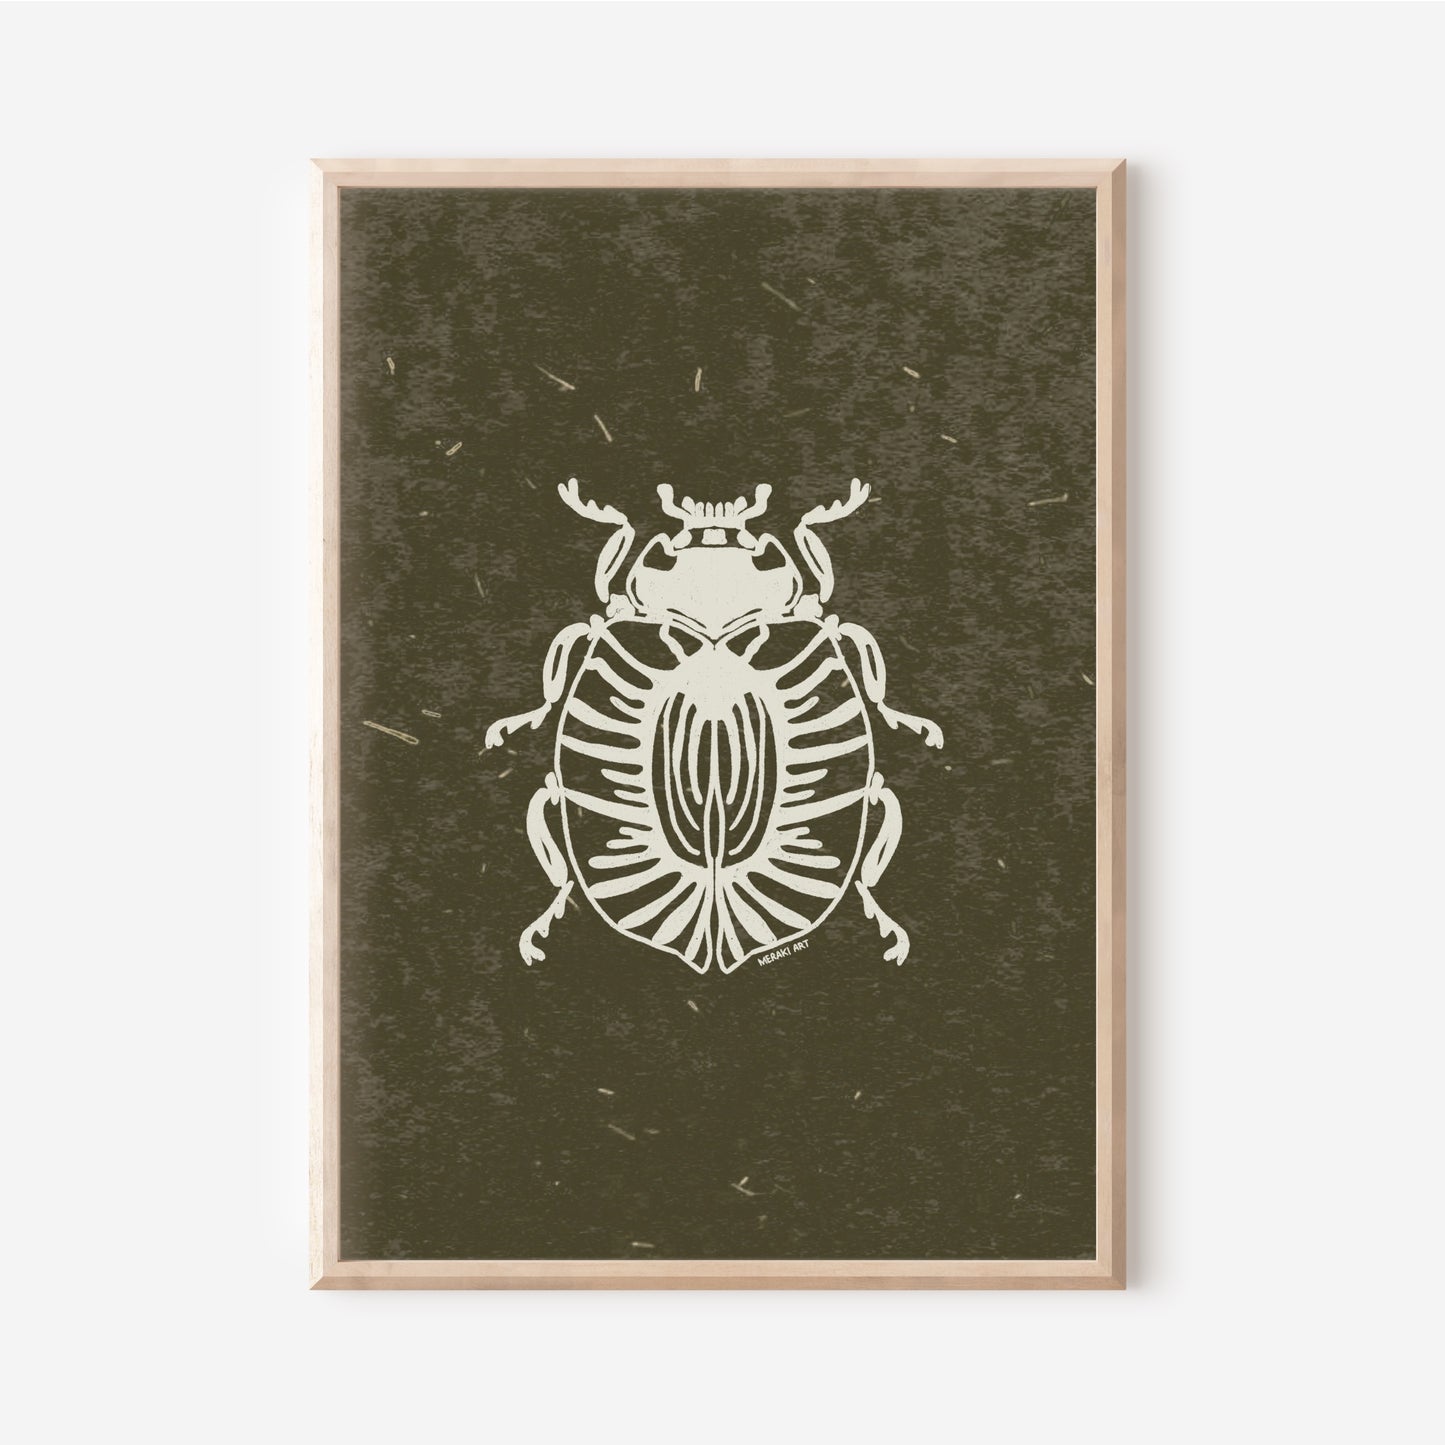 Beetle - Digital art print